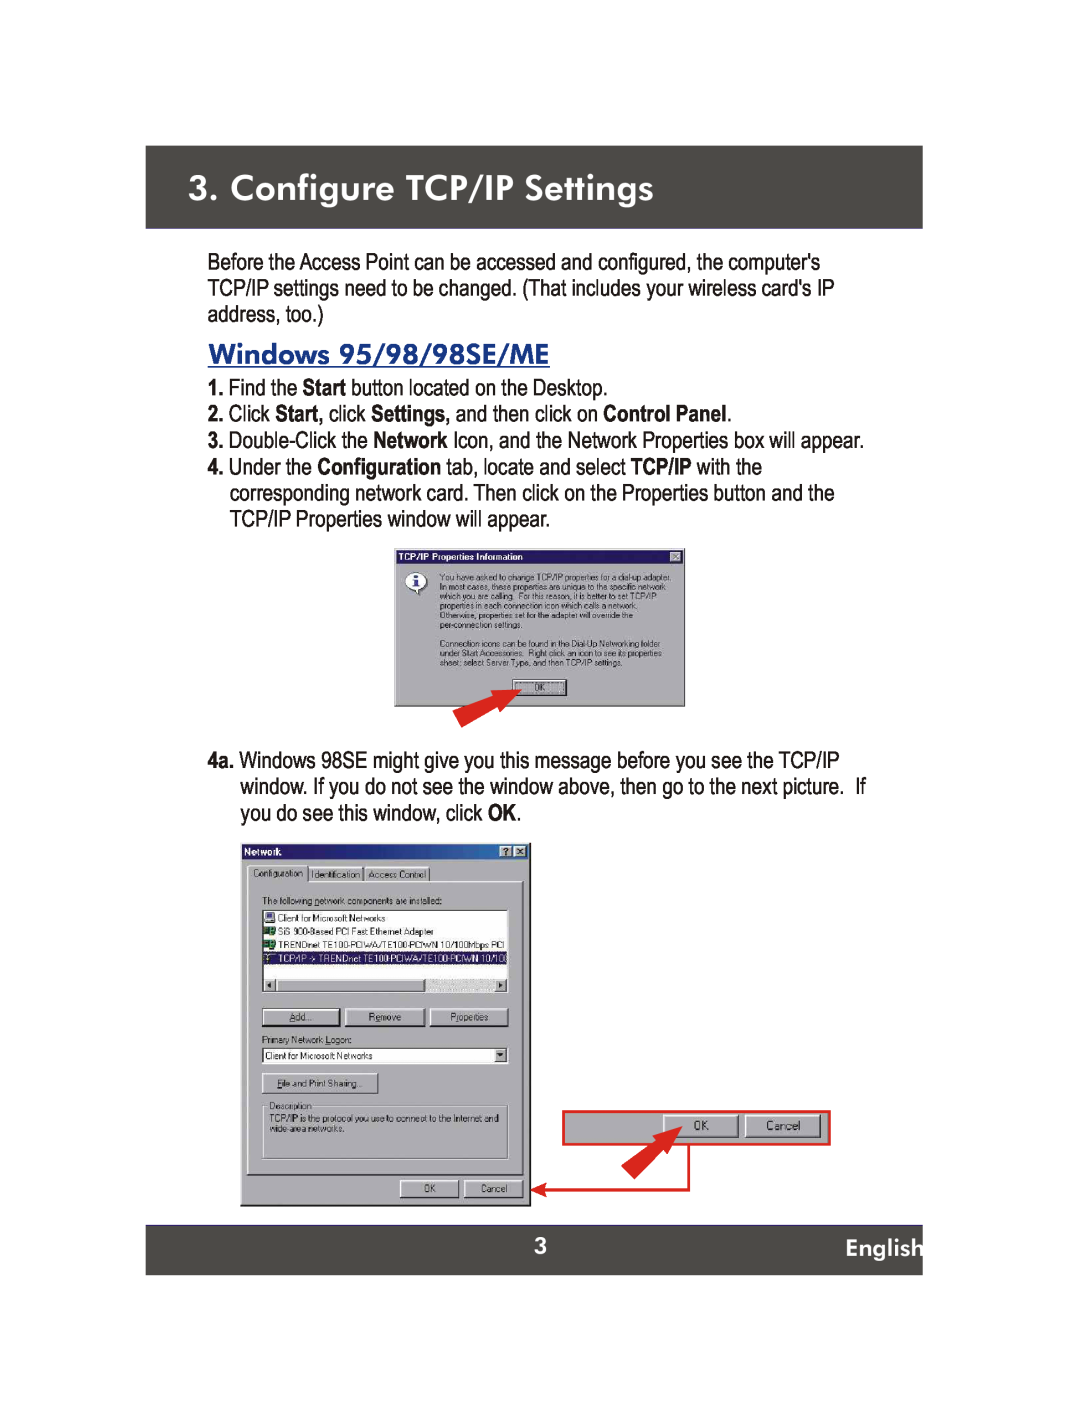 TRENDnet Wireless G LAN Access Point, TEW-430APB manual Configure TCP/IP Settings, Windows 95/98/98SE/ME, English 